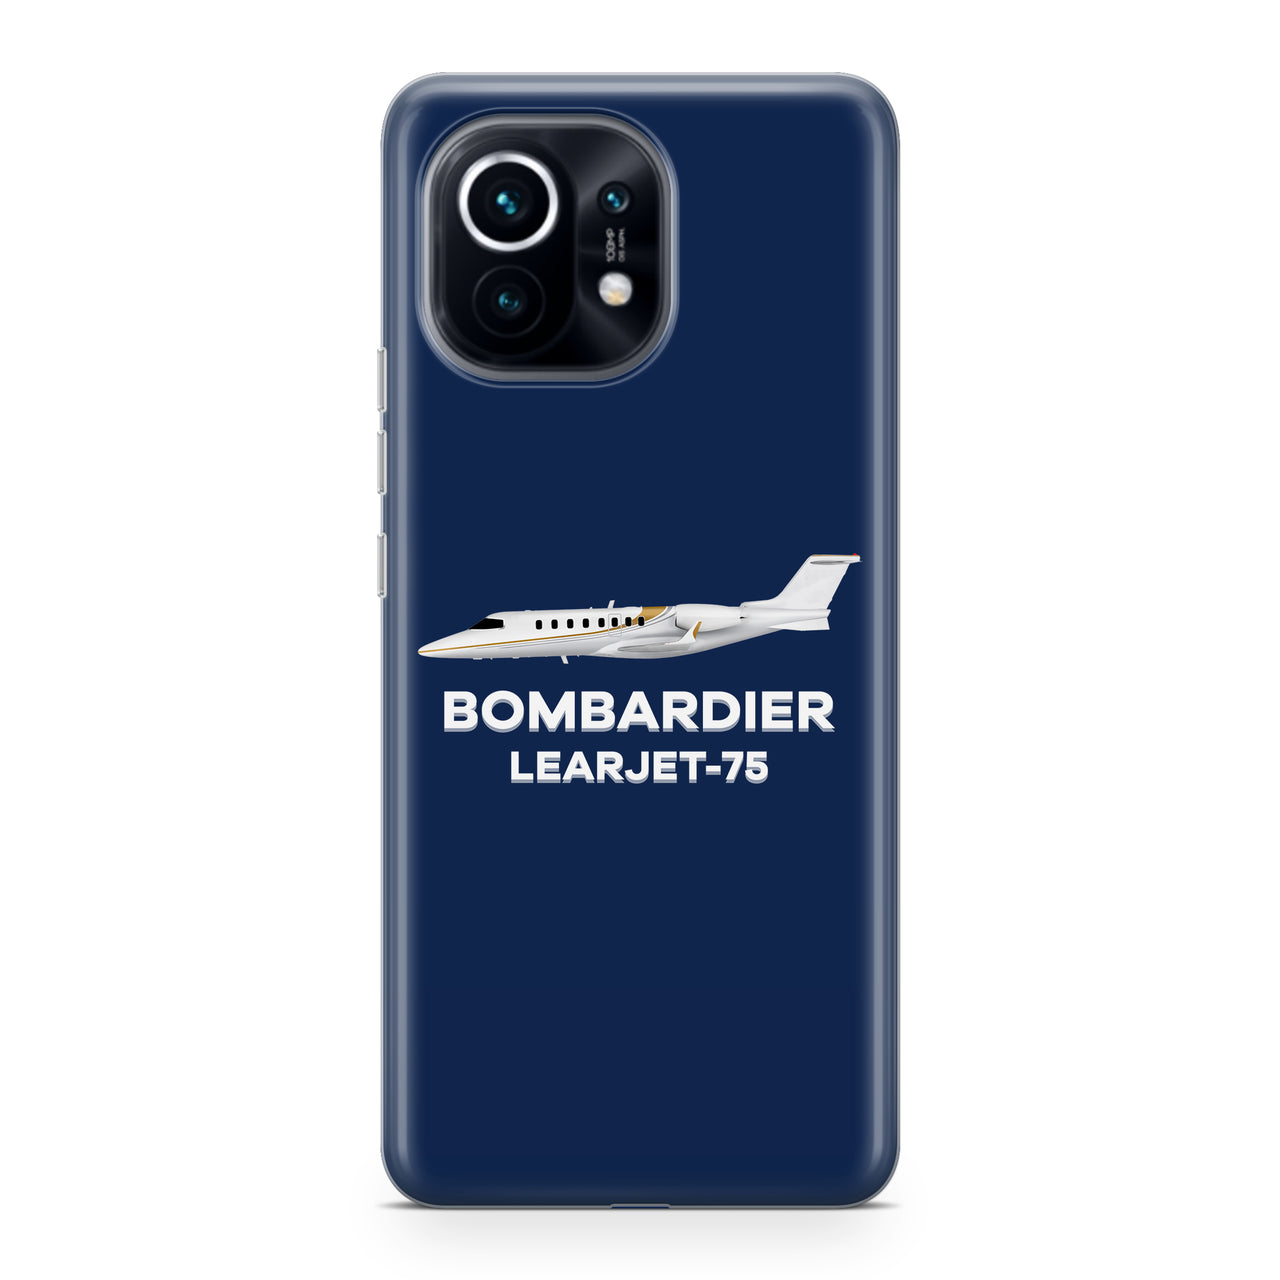 The Bombardier Learjet 75 Designed Xiaomi Cases